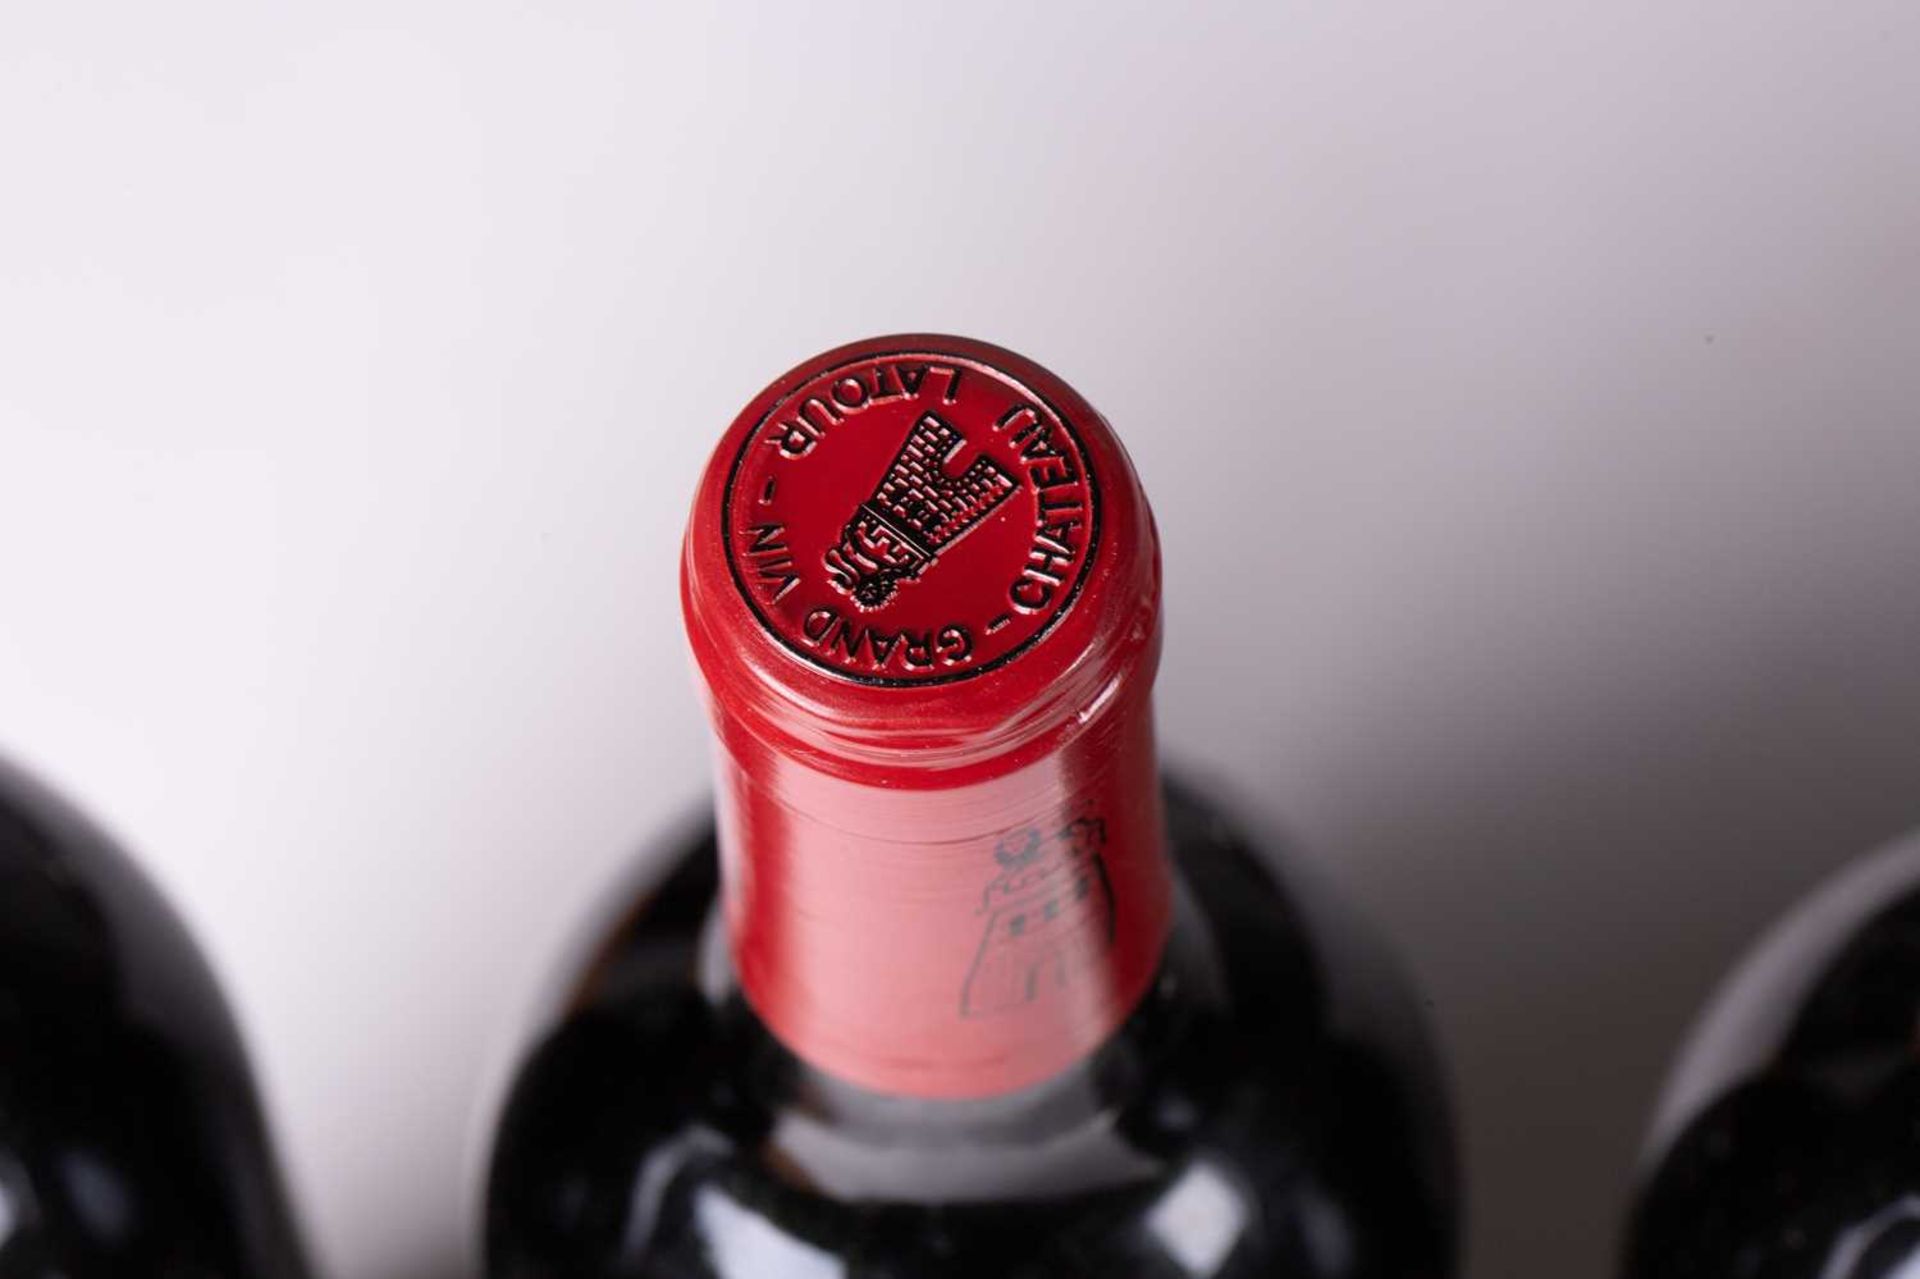 A twelve bottle case of Grand Vin de Chateau Latour, 1988, tissue wrapped bottles, ullage bottom - Image 10 of 21